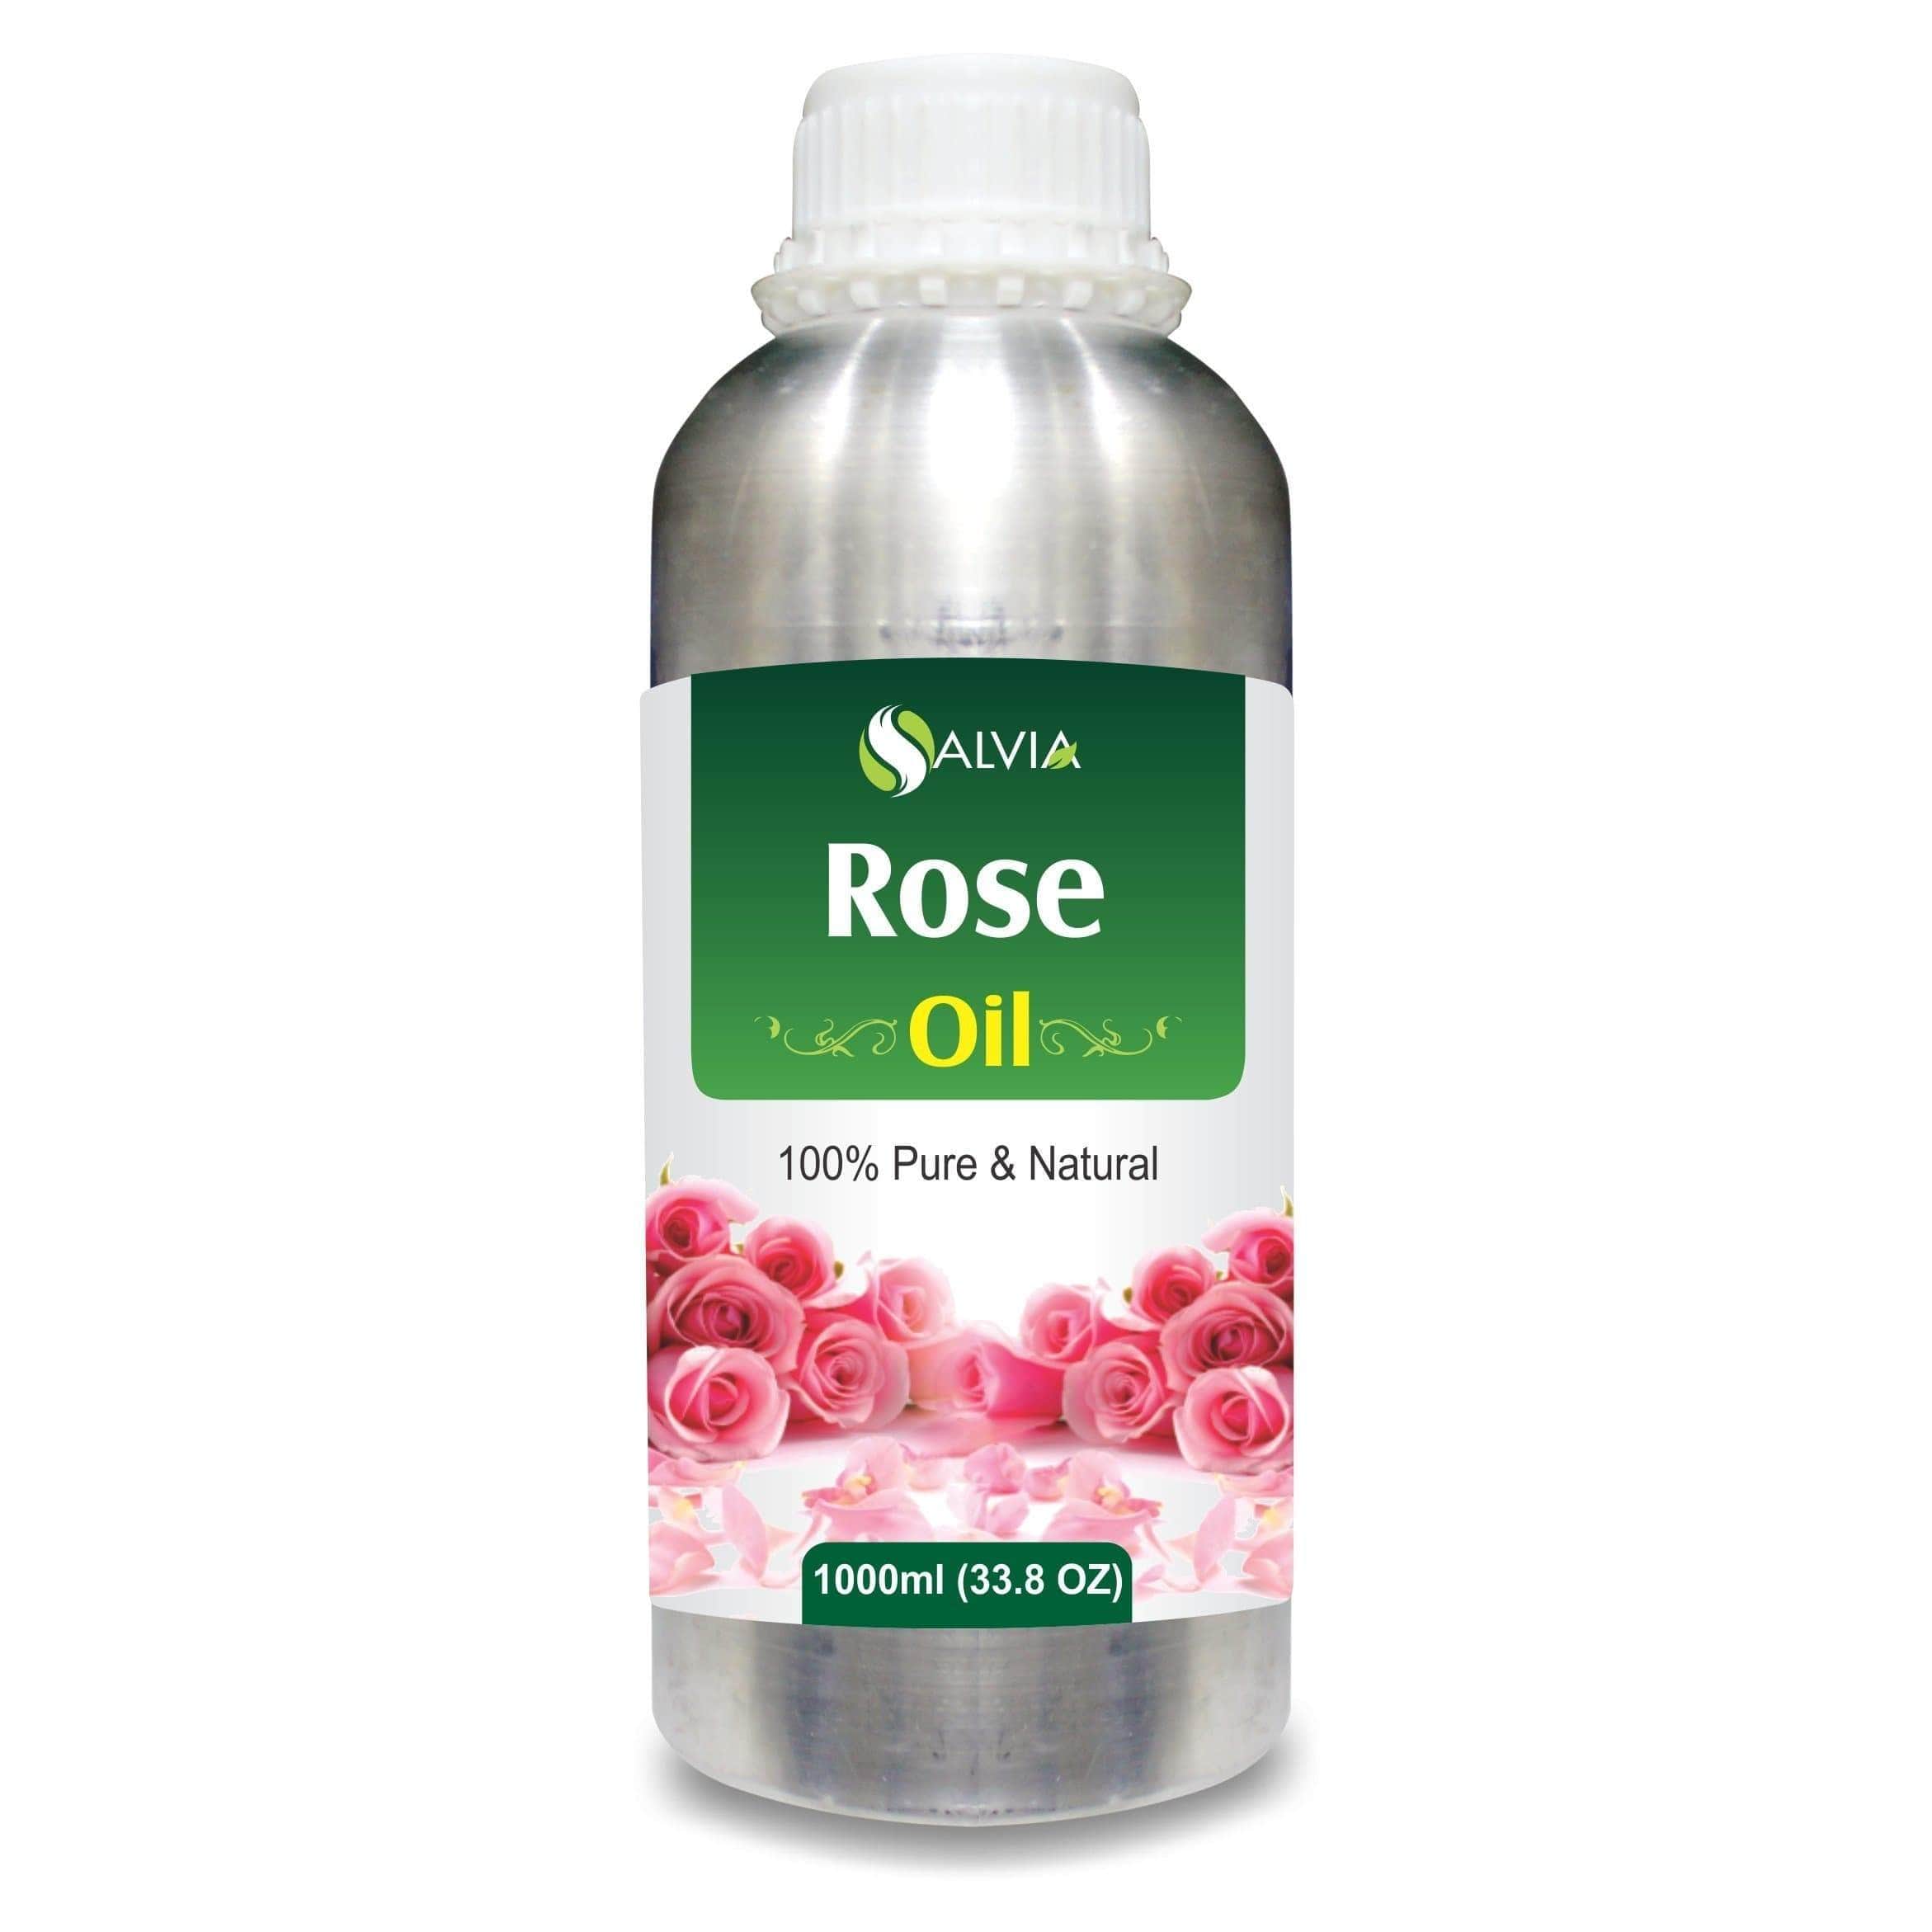  rose oil benefits